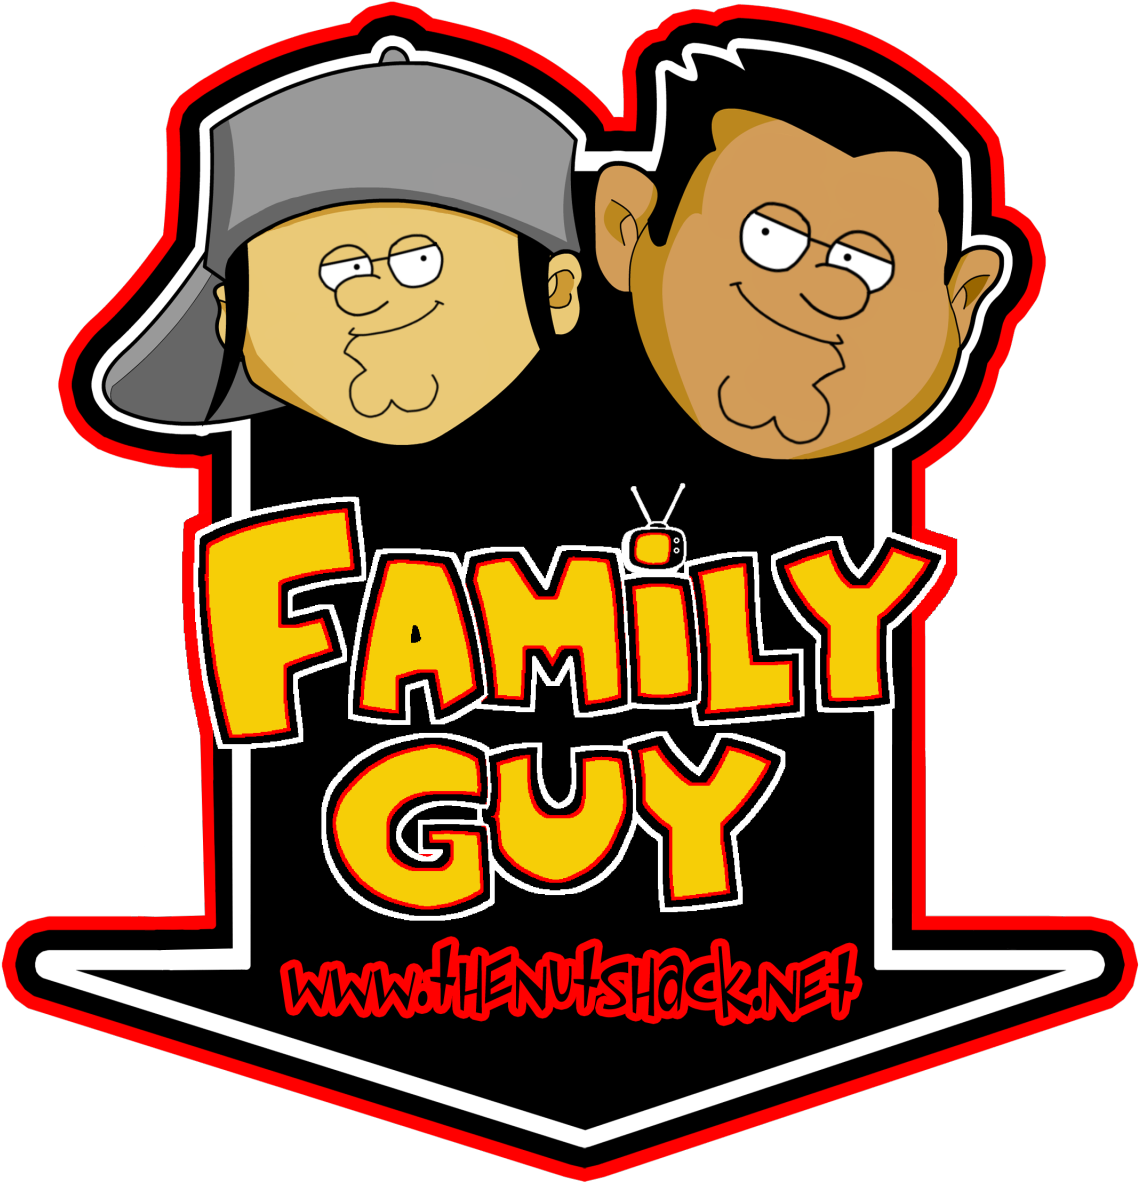 The Nutshack Family Guy Peter Griffin Phil Jack - Animal Crossing Qr Code Meme (1280x1280)